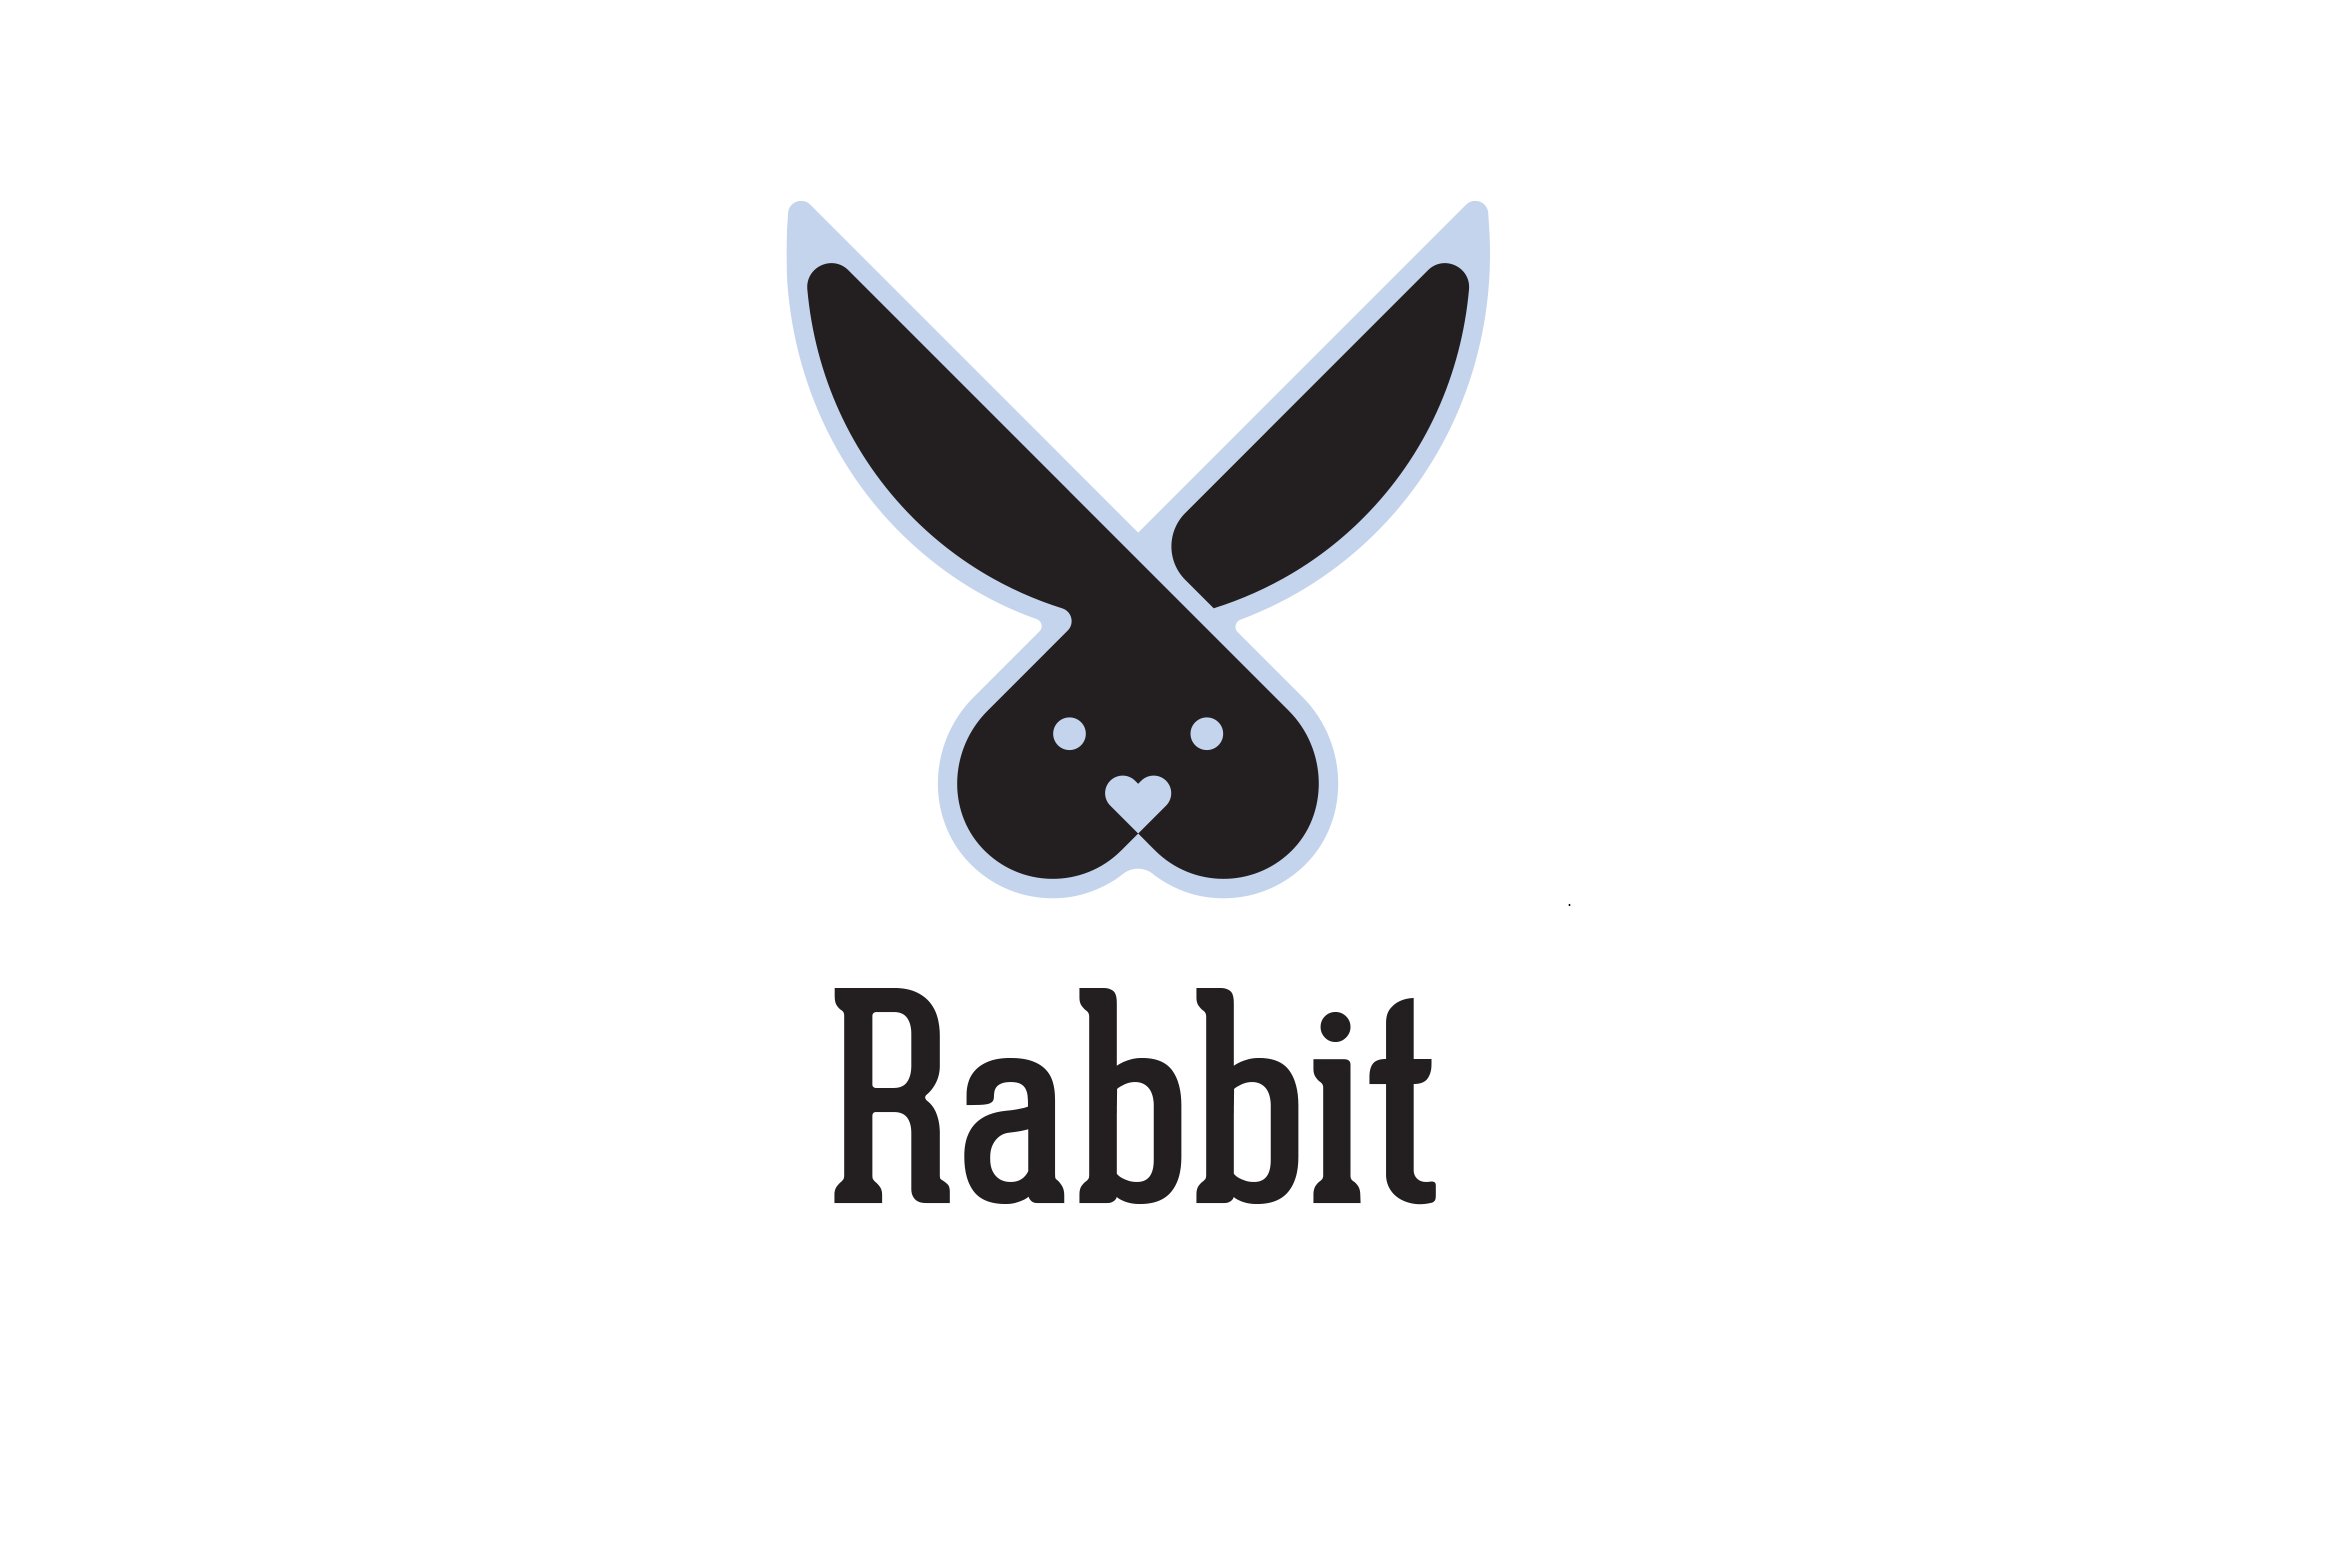 Rabbit logo cover image.